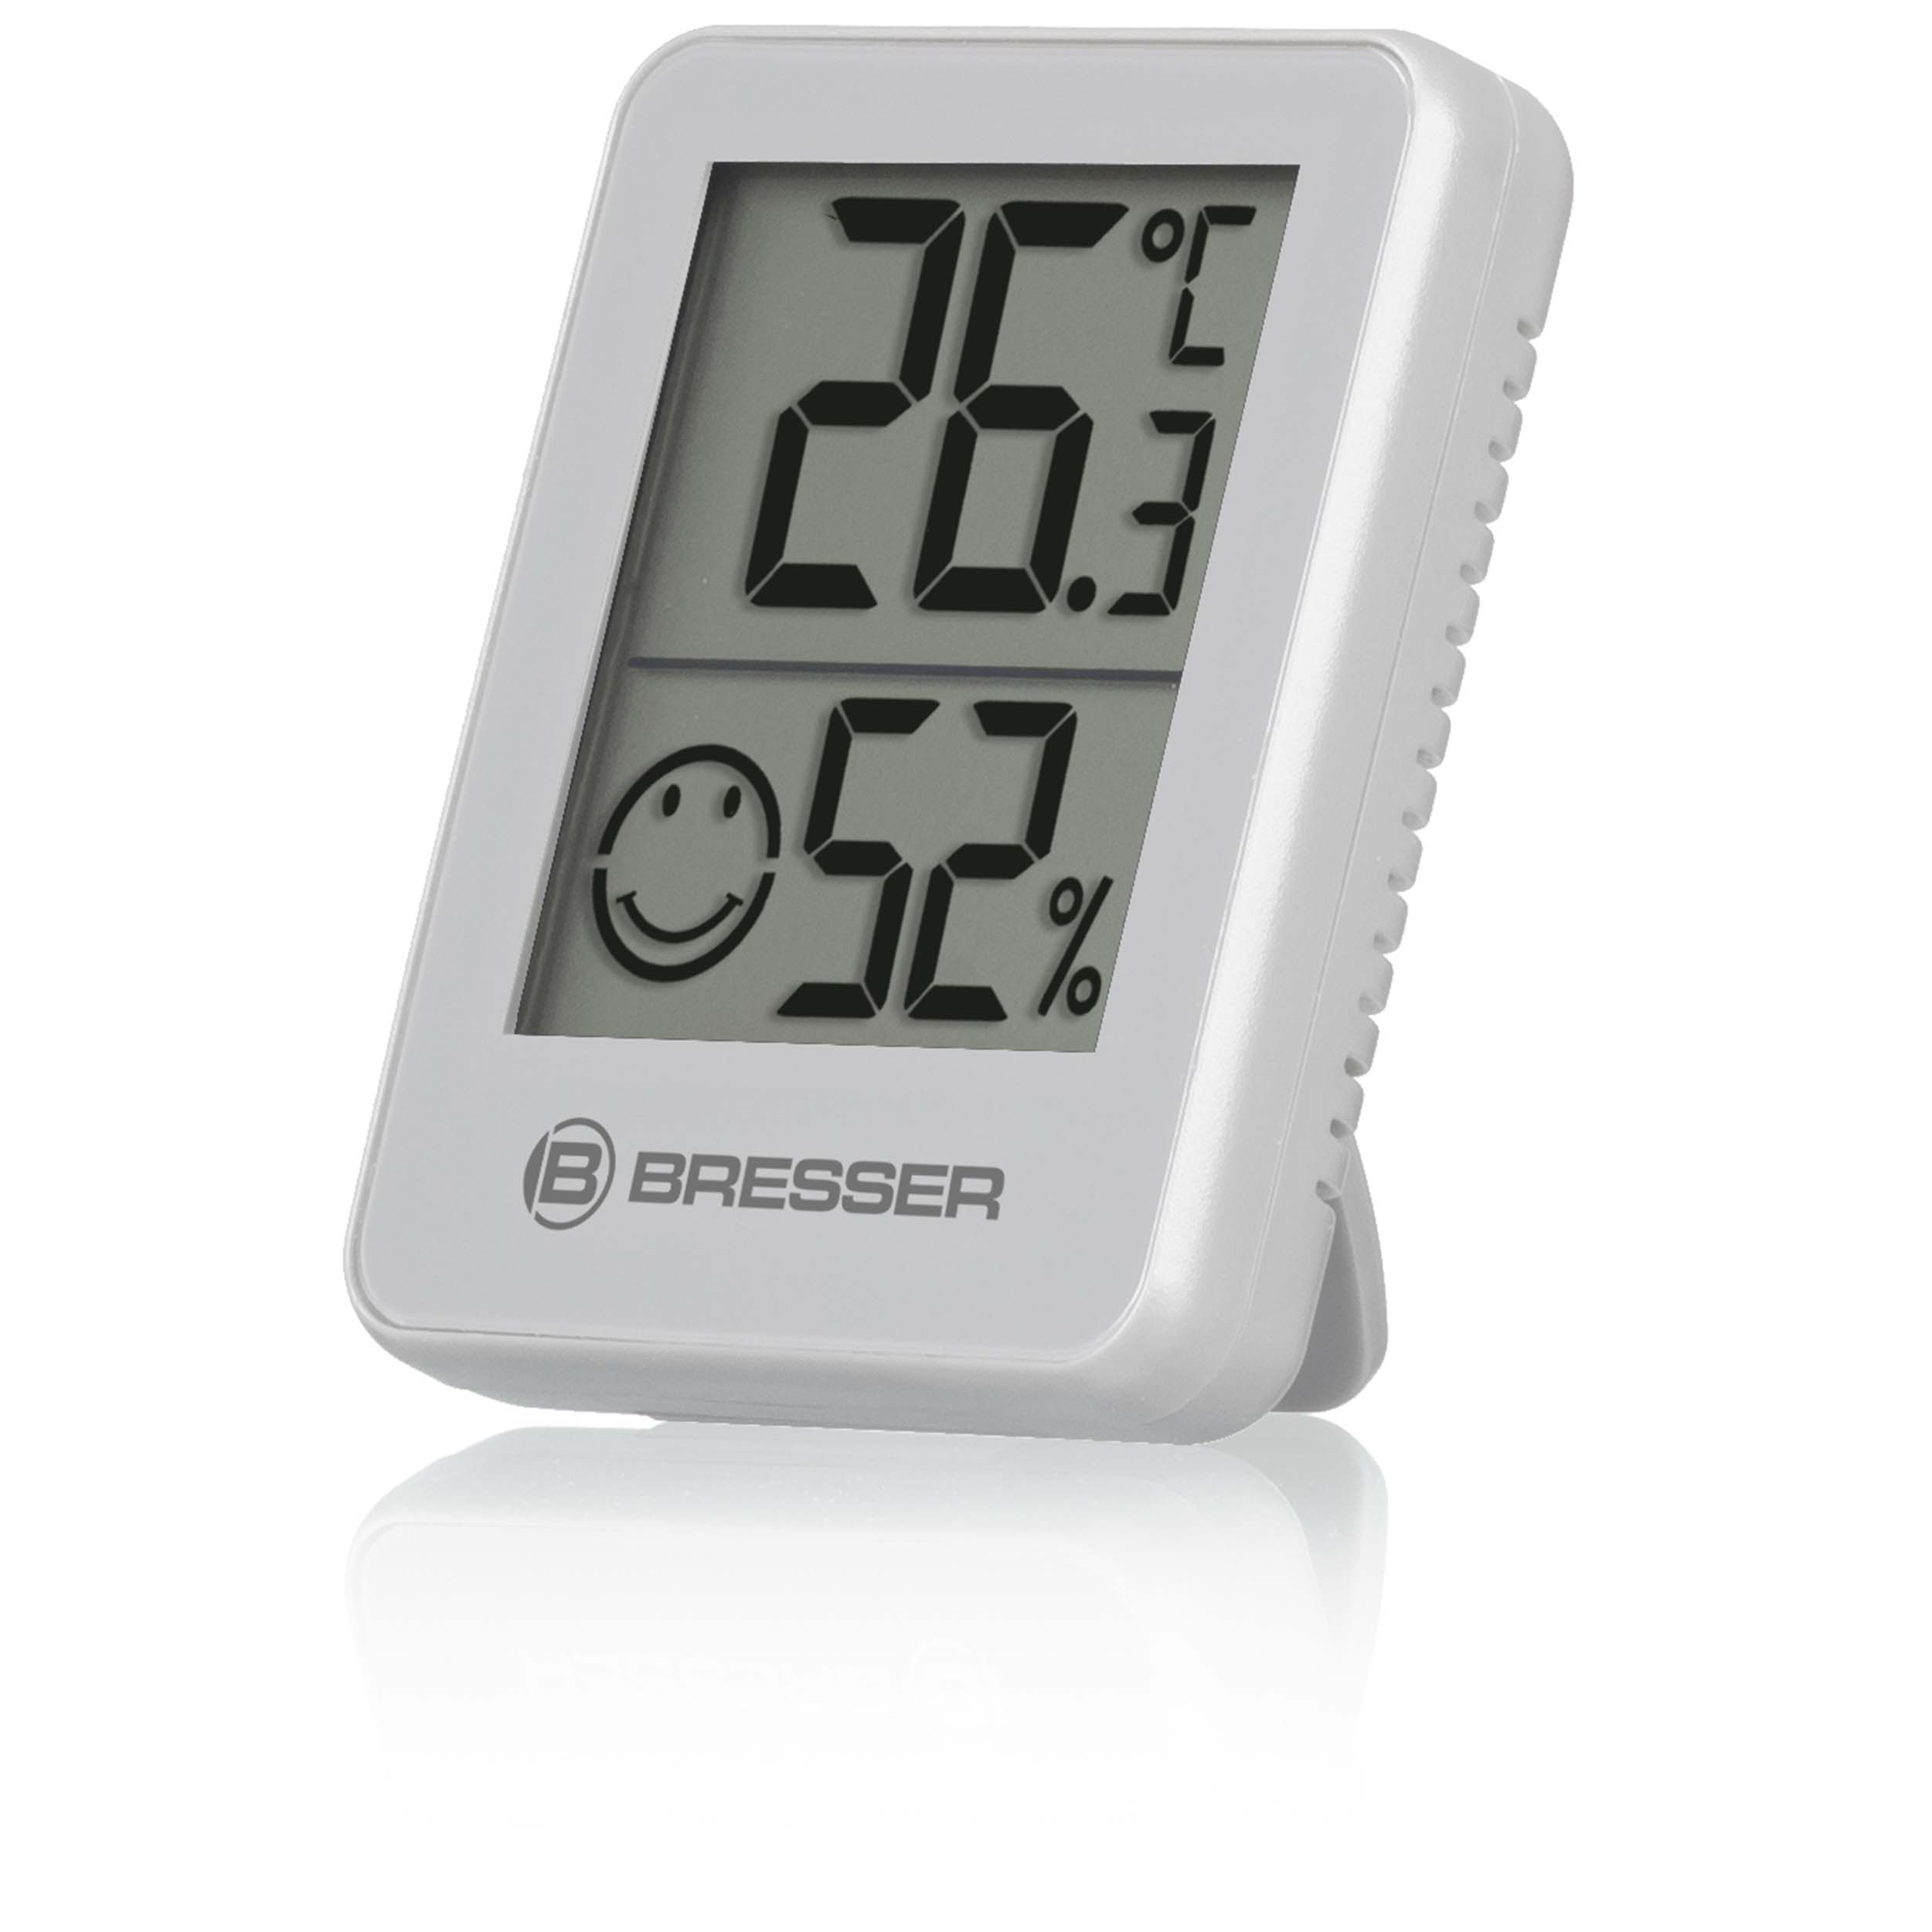 BRESSER ClimaTemp Thermo-Hygrometer Indikator 3er Set